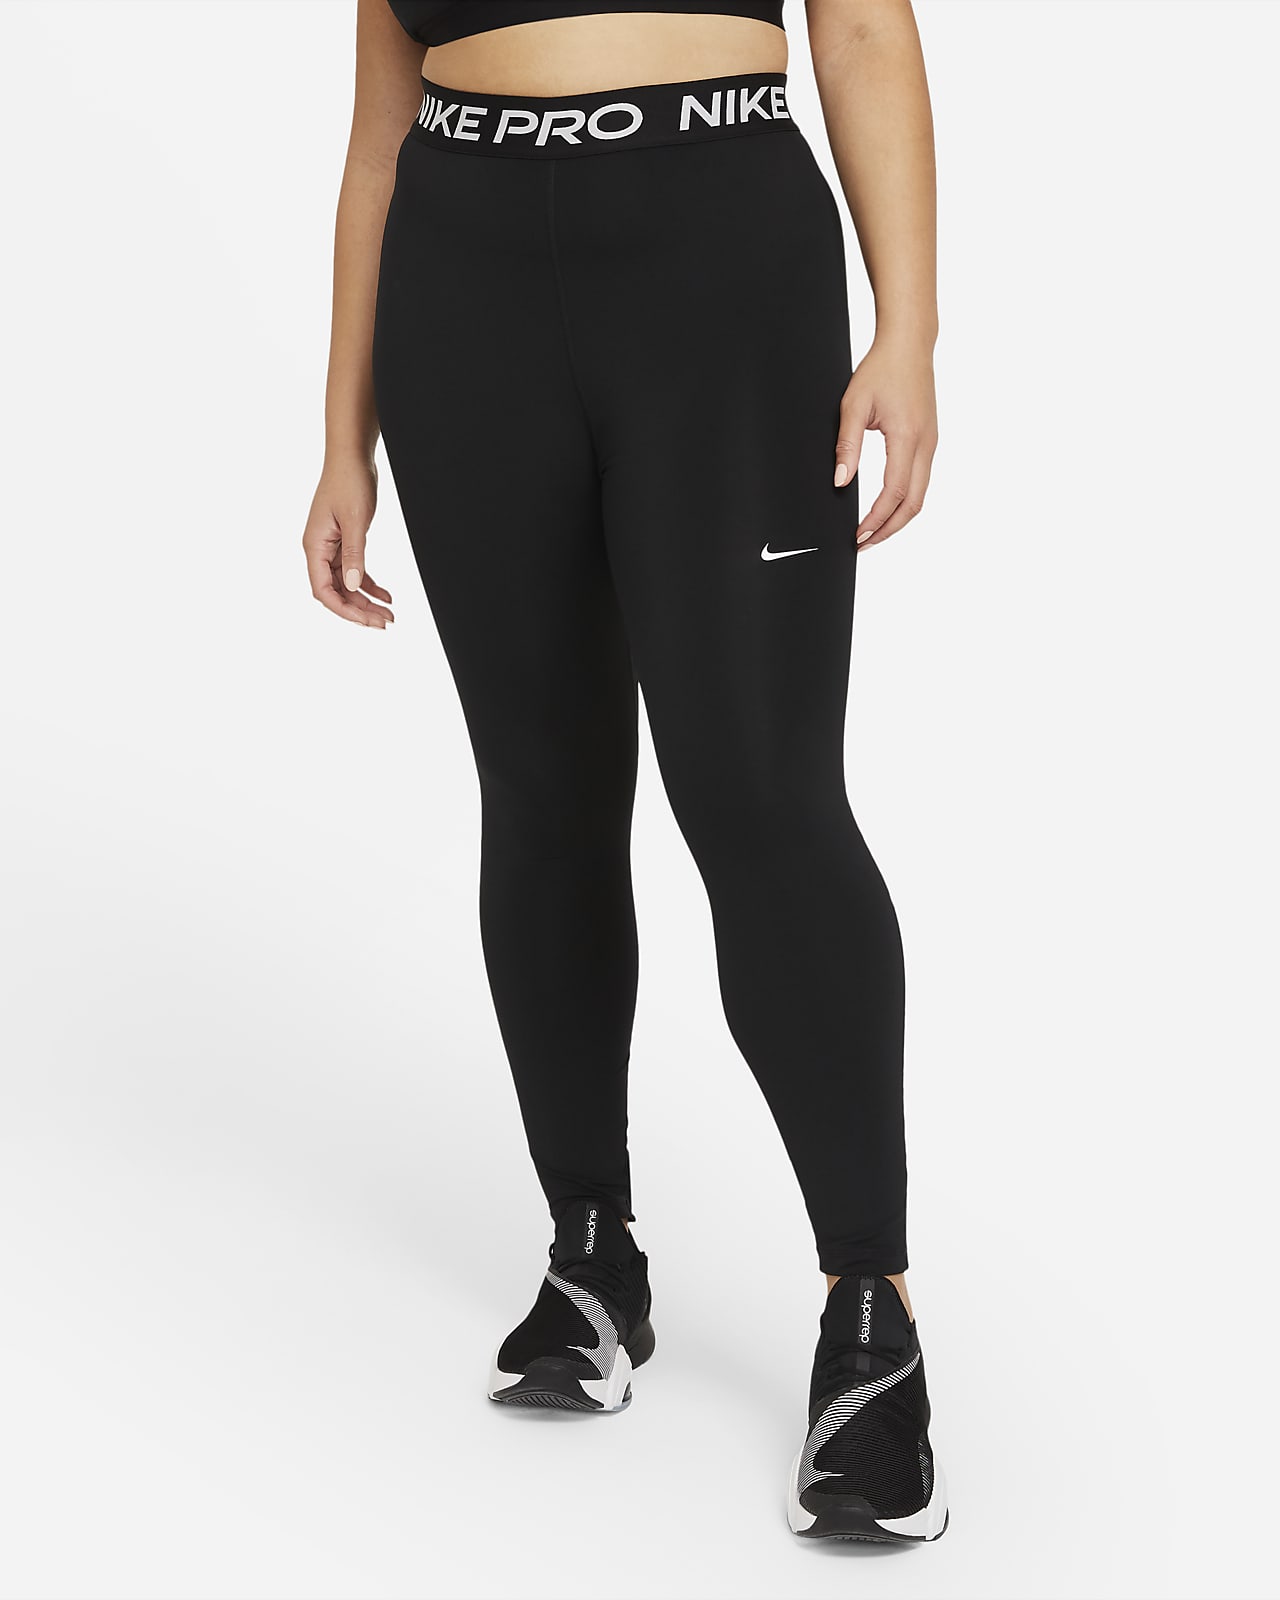 Legging Nike Pro 365 pour Femme (grande 